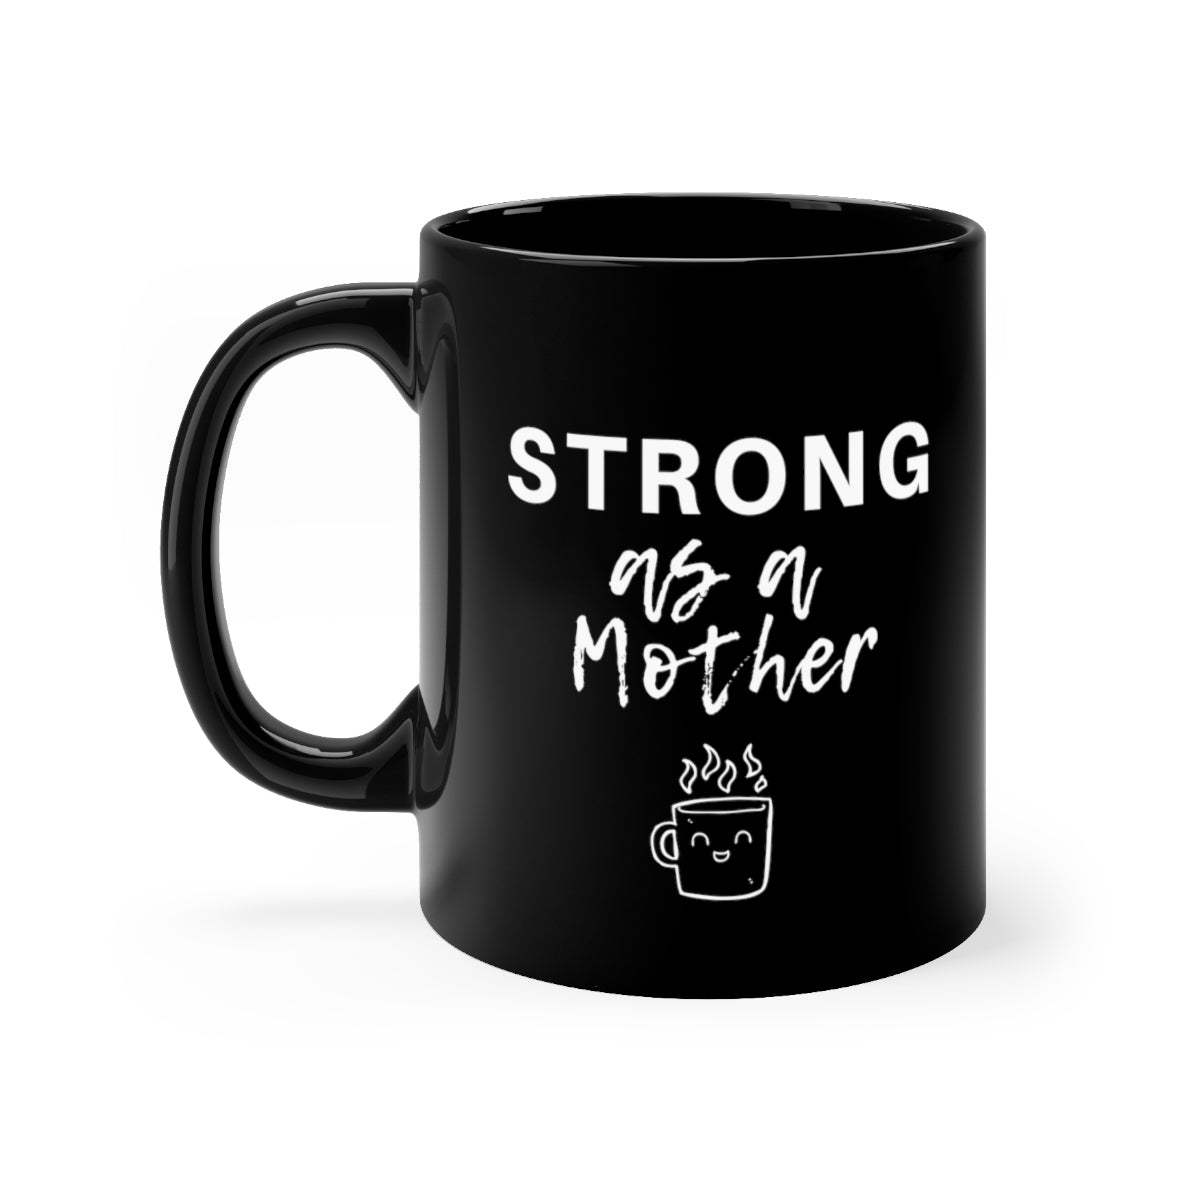 Strong as a Mother Black mug 11oz